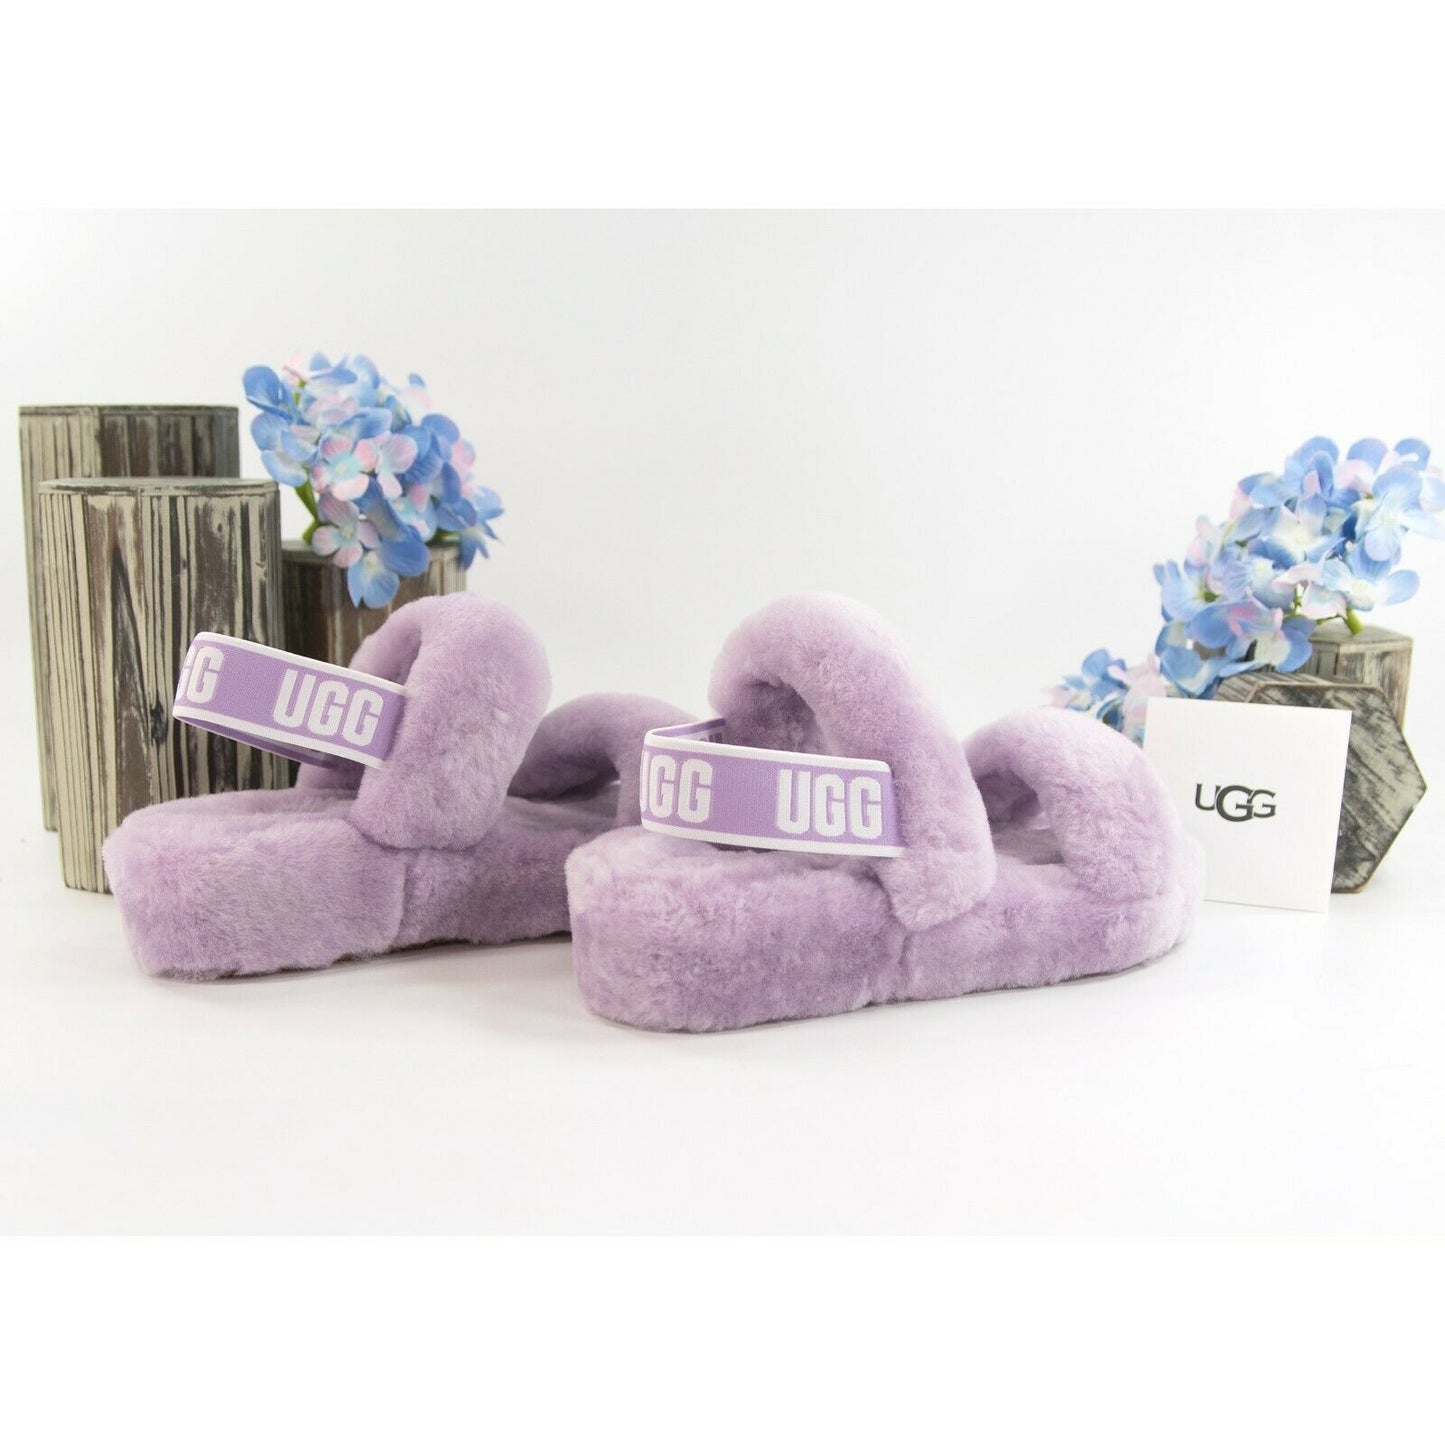 UGG Fluff Oh Yea Lilac Purple Sheepskin Fur Slippers Slides Sandals Sz 7 NIB